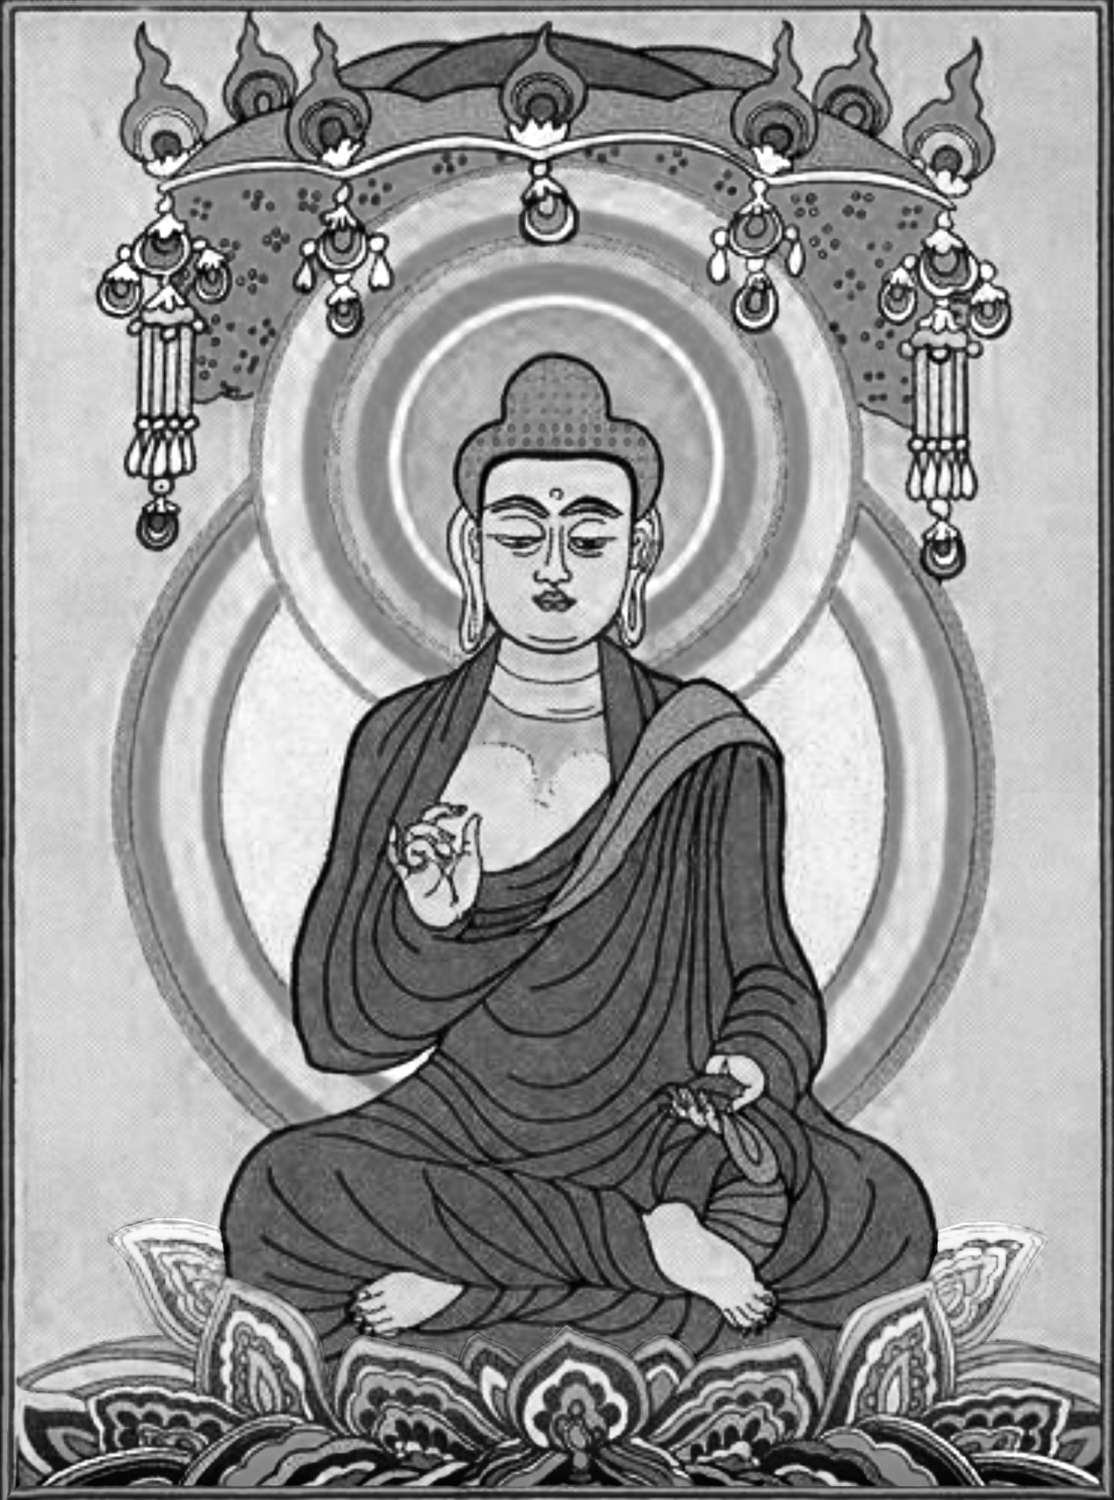 /// Illustration du prince Siddhartha Gautama en état de Bouddha ///